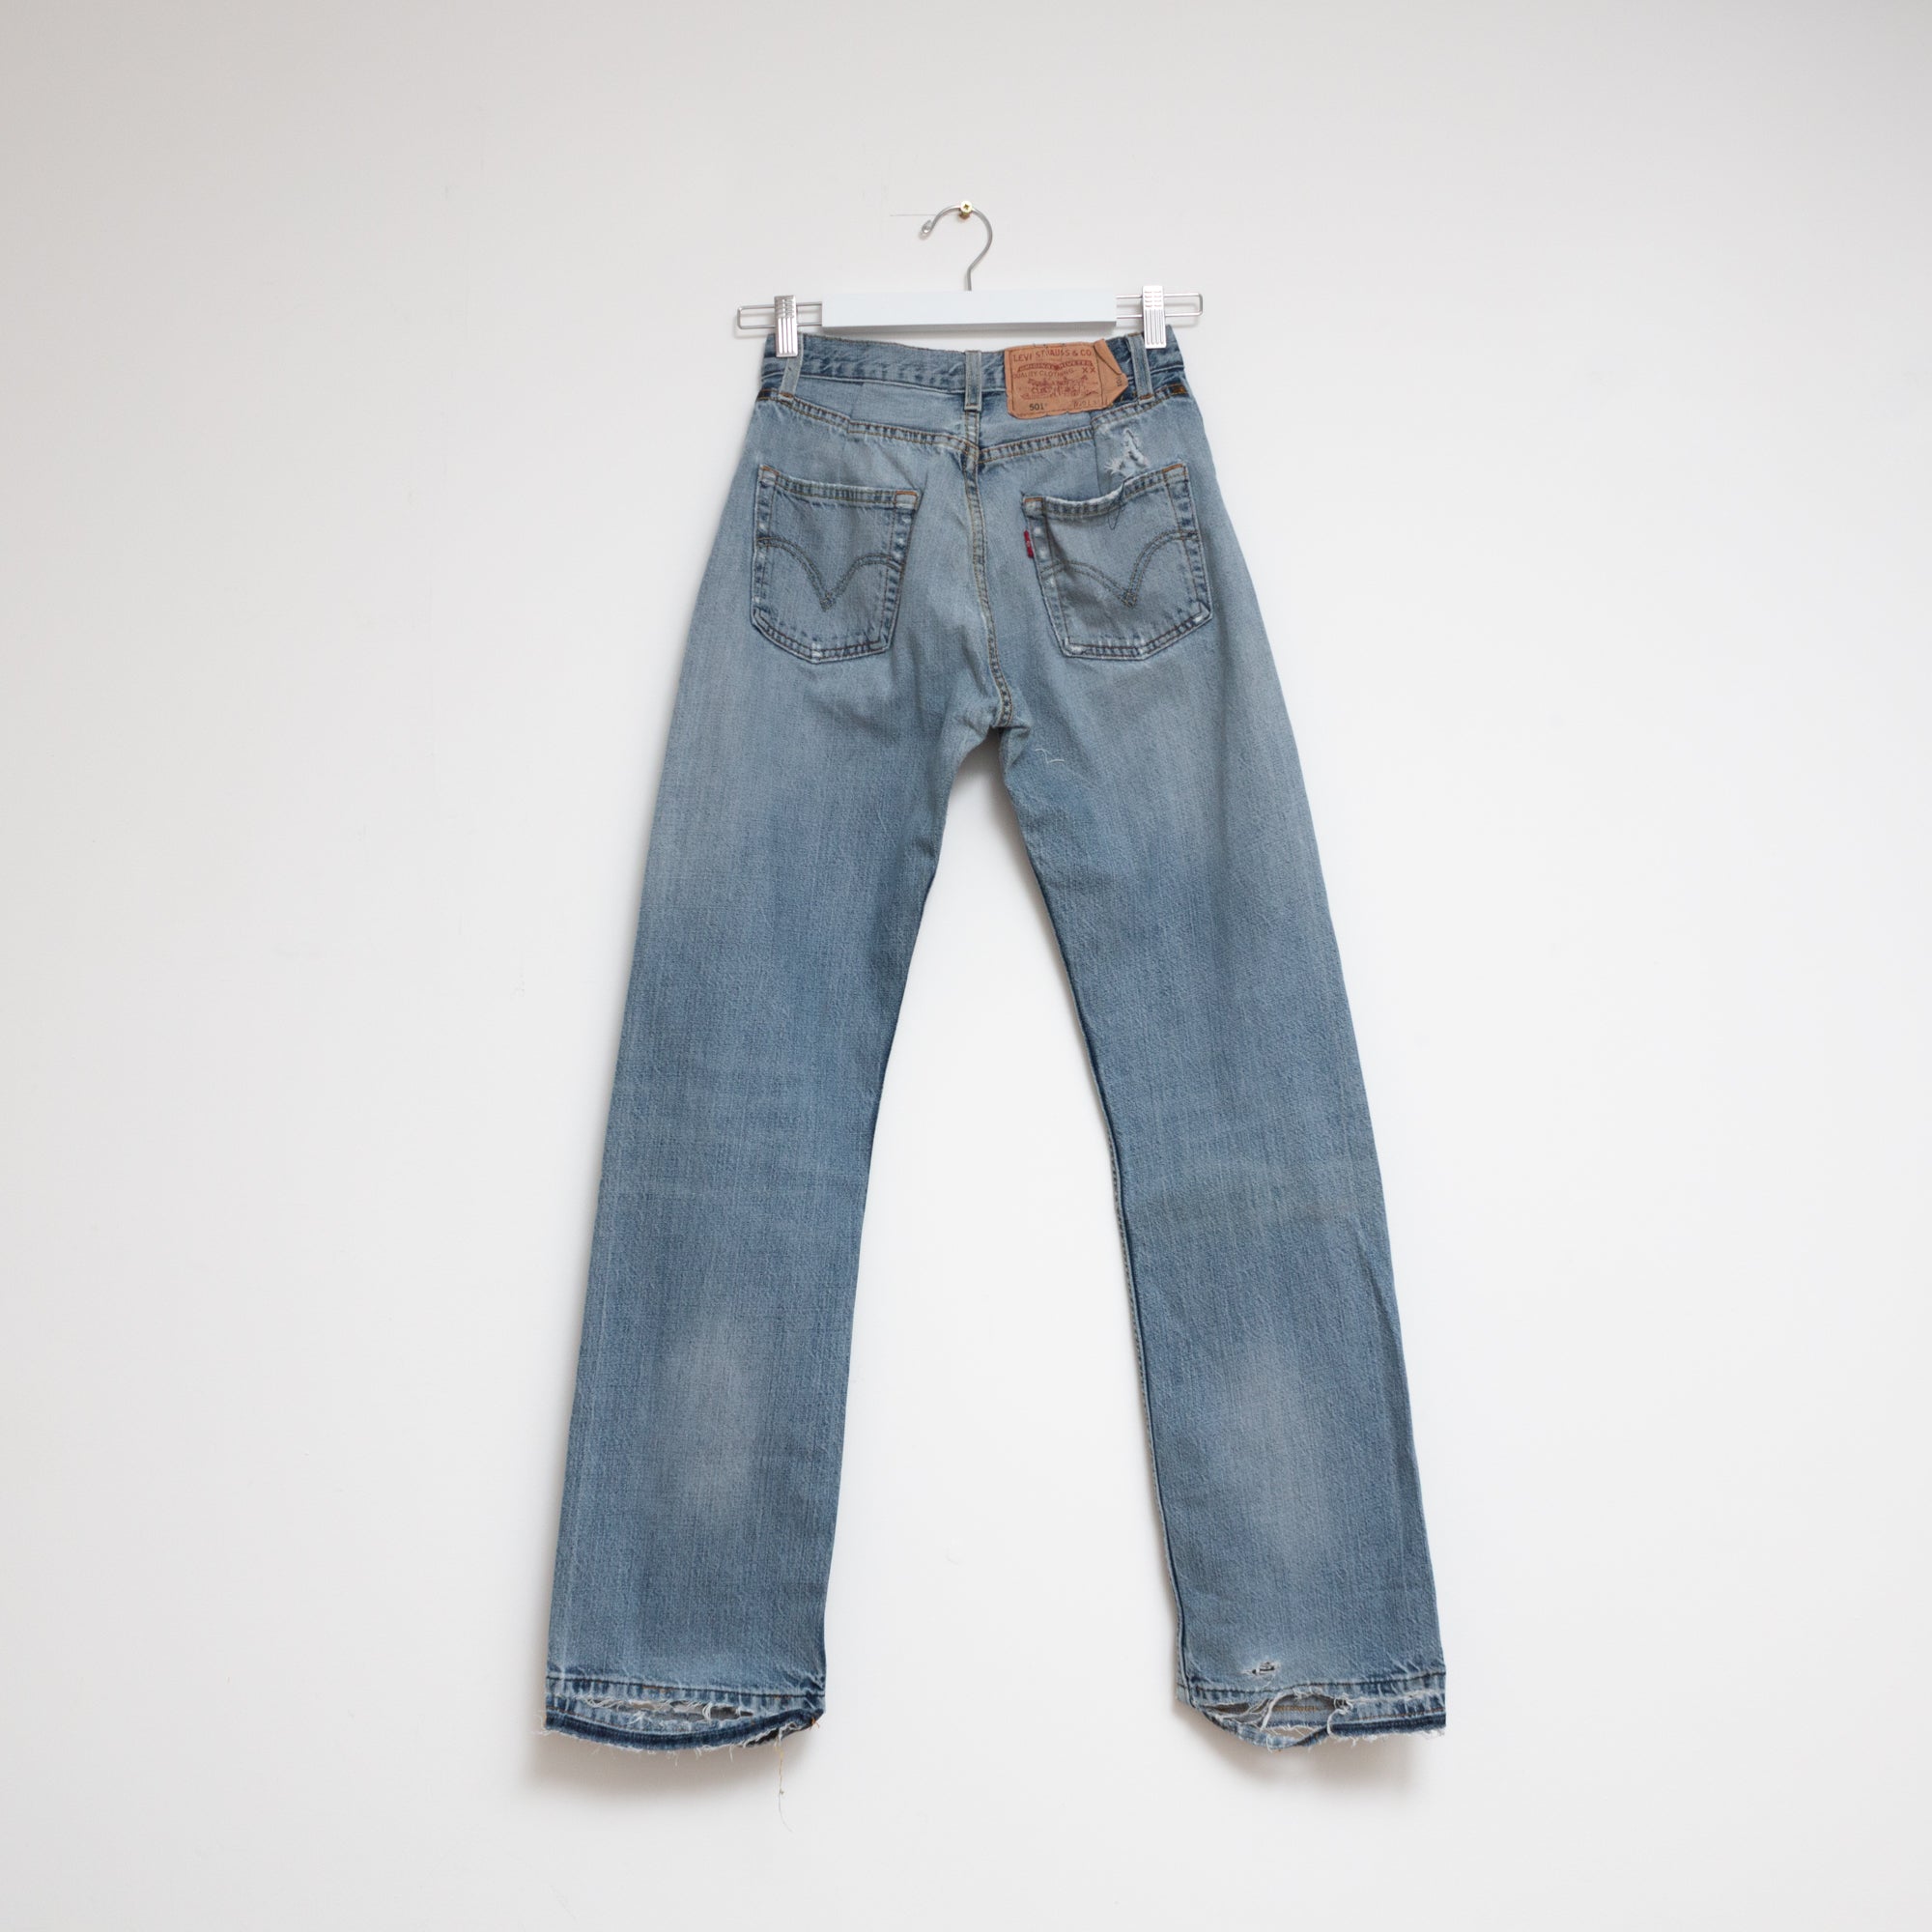 Levi's Jeans W26 L33